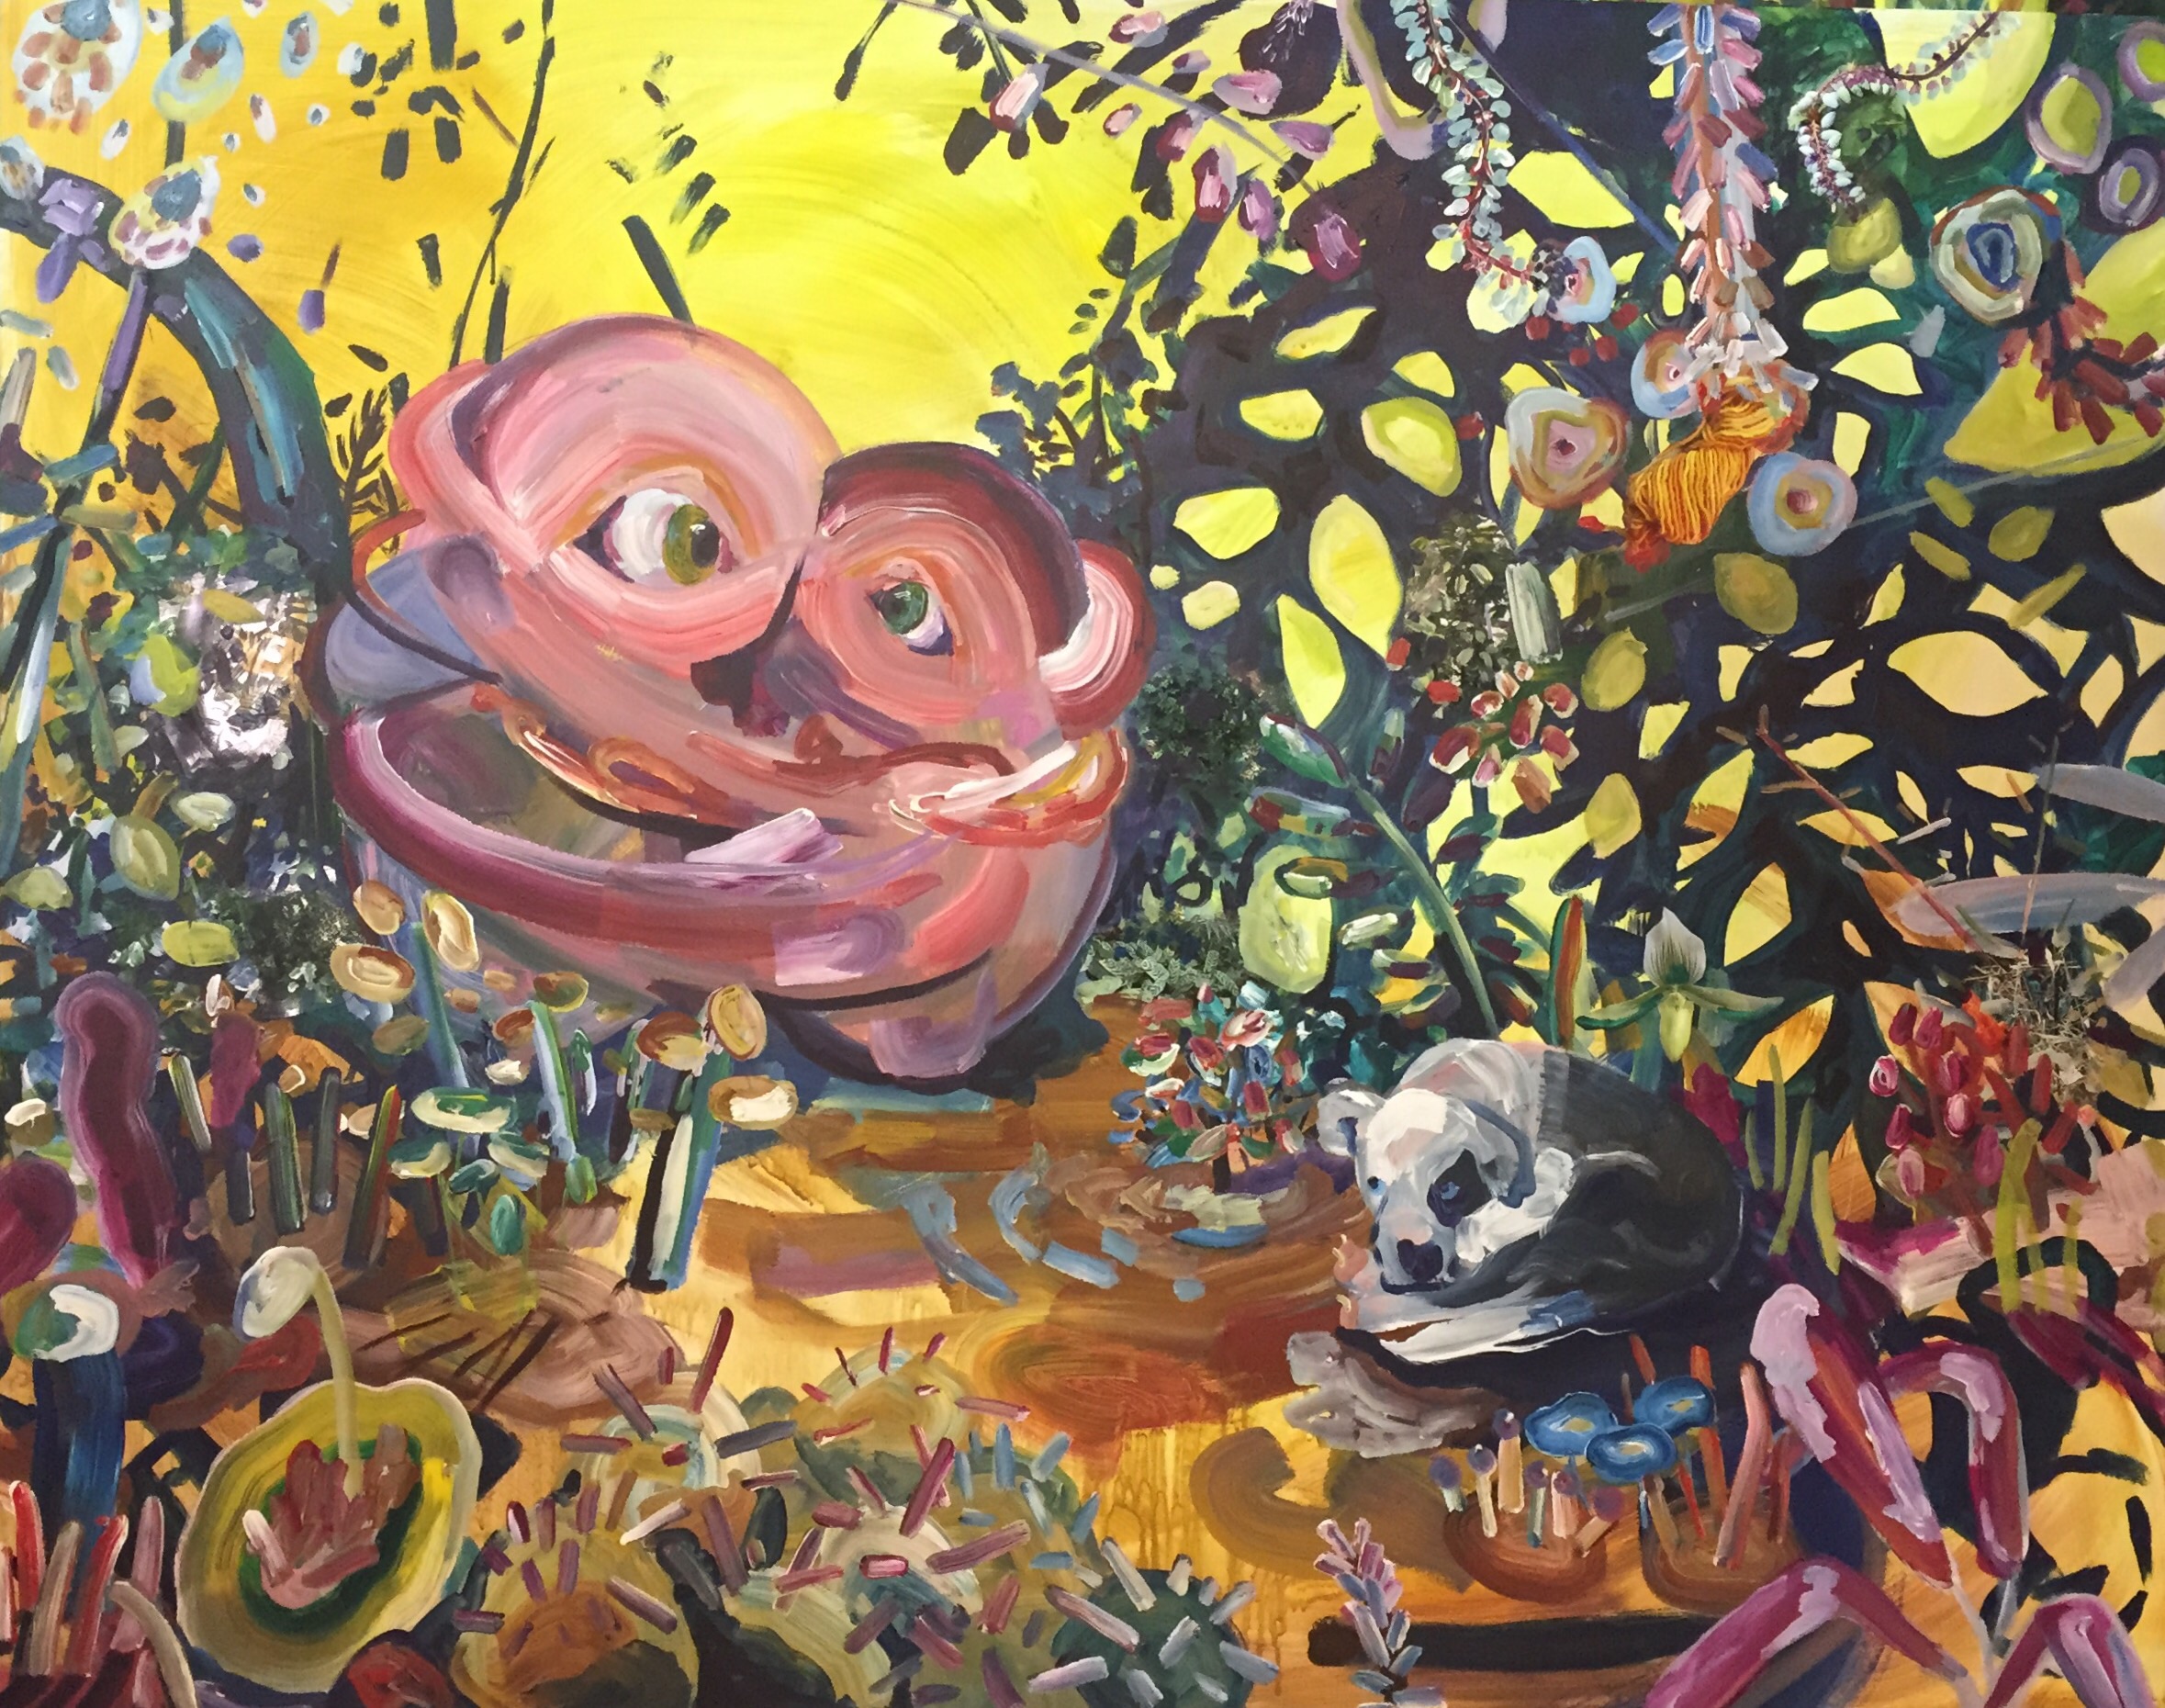 Abby Gregg, "Interior Space," 48" x 58", 2015